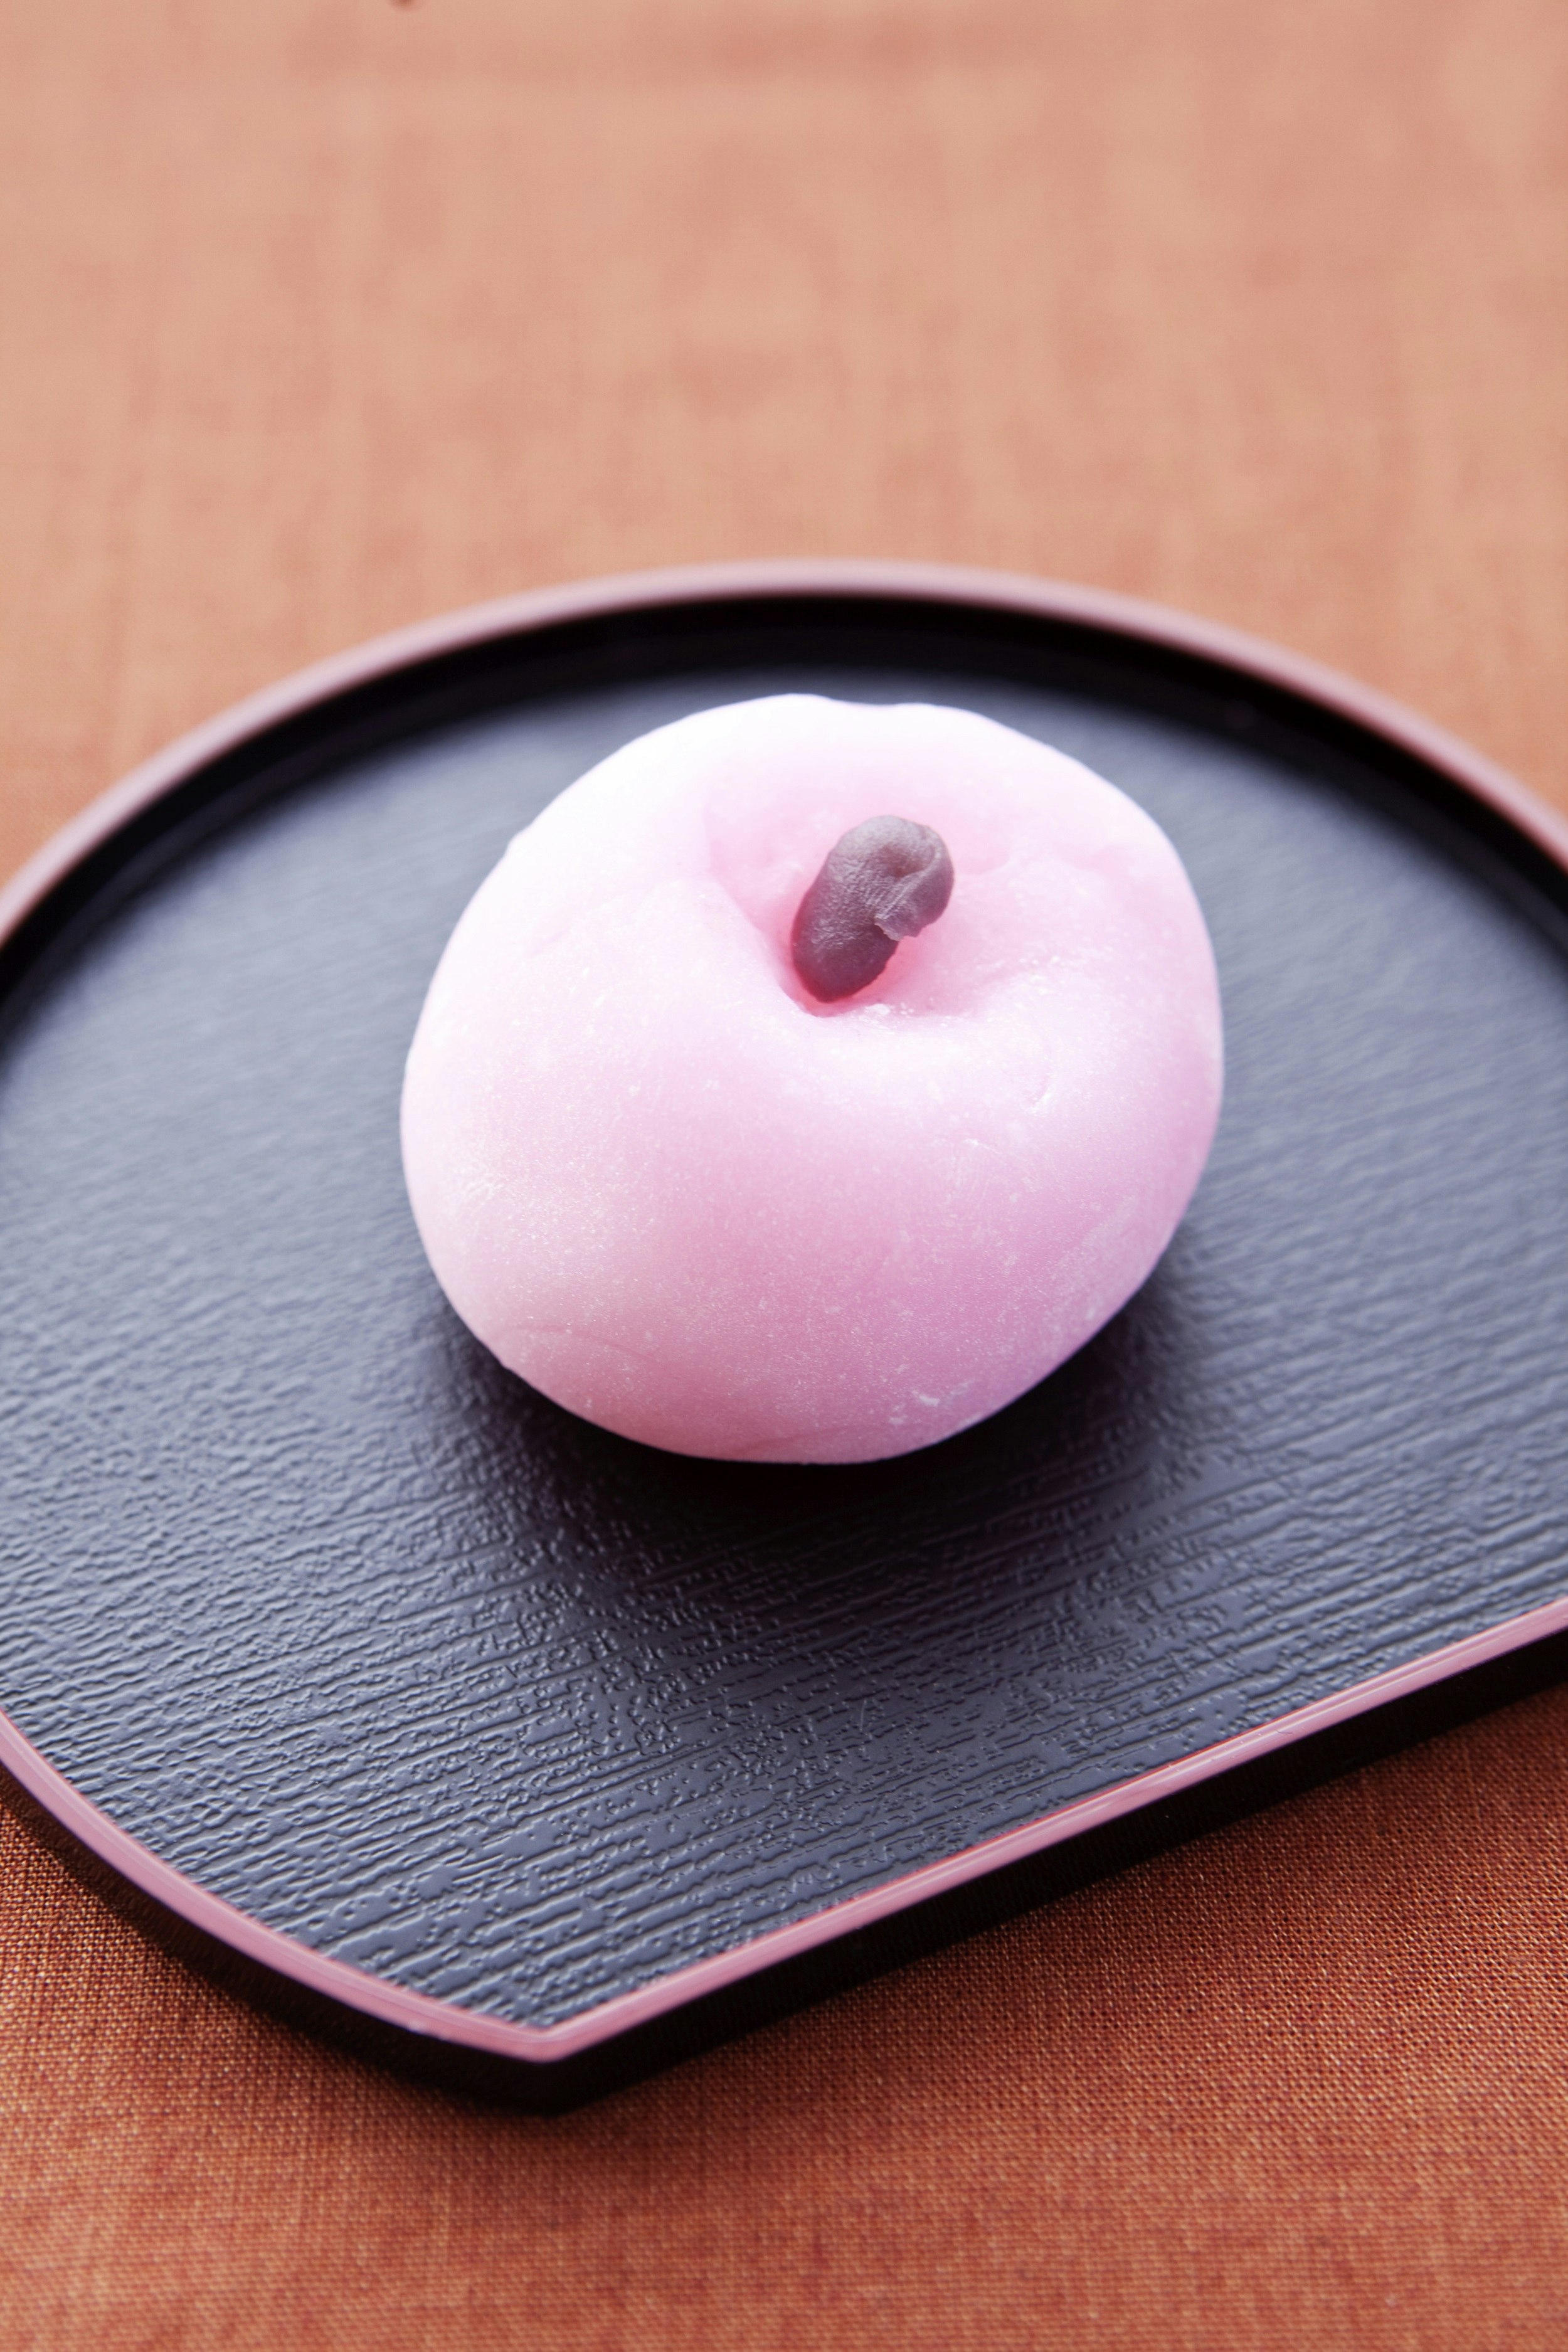 A light pink ball of a wagashi treat sits on a dark purple plate; inside it is a small purple sweet.